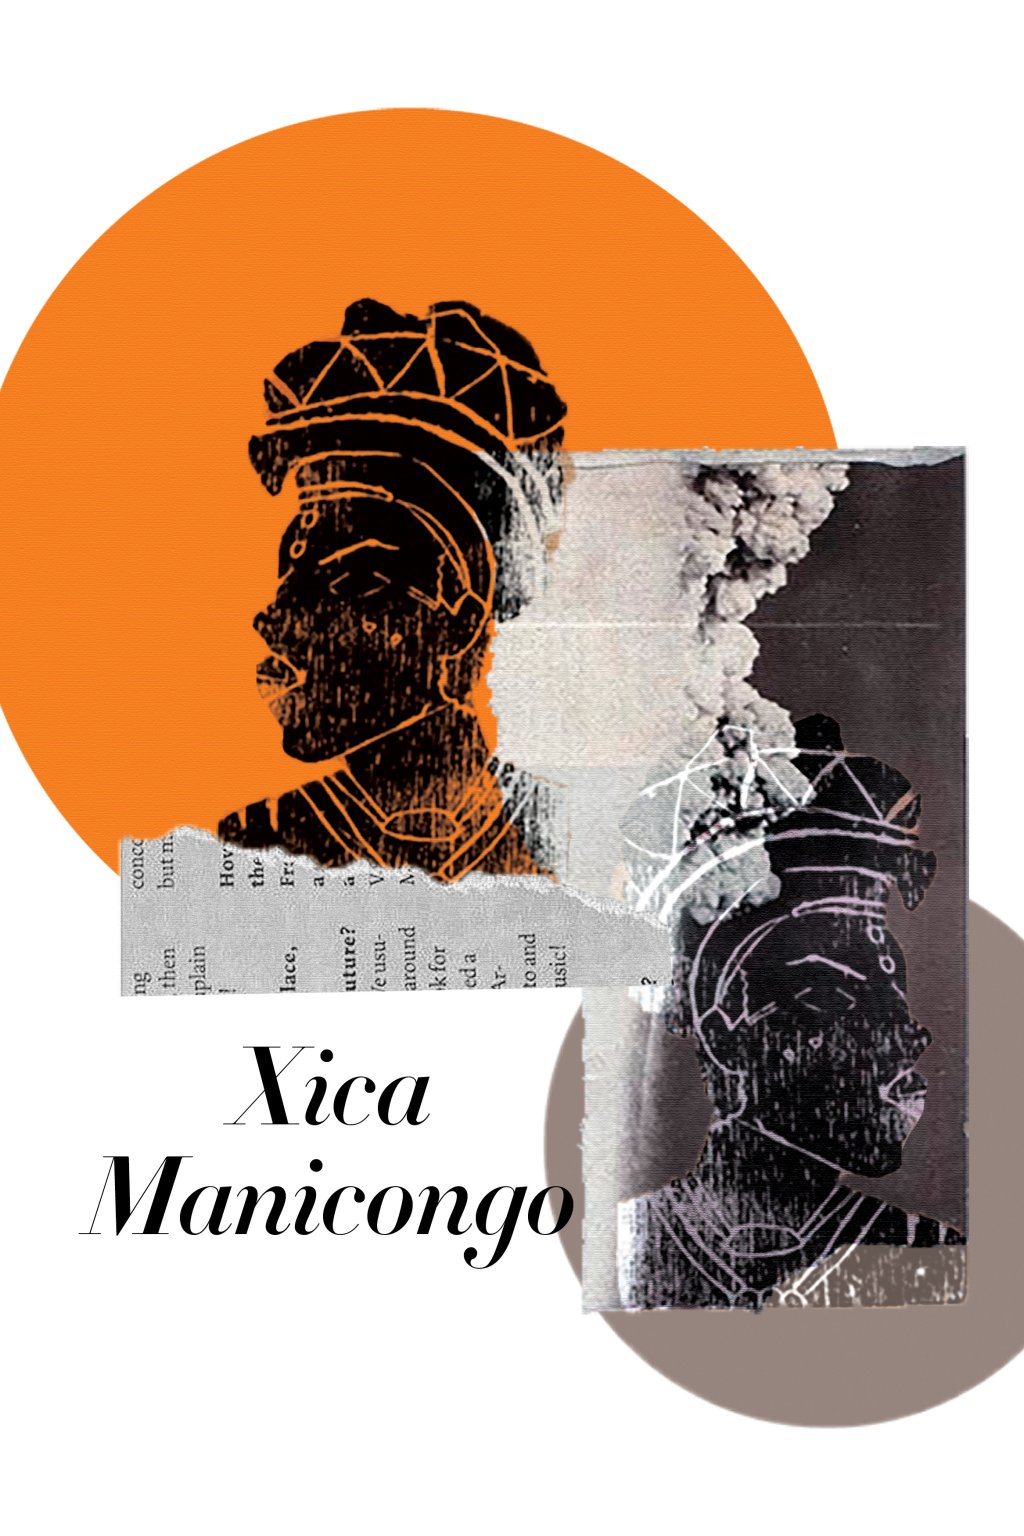 Xica Manicongo